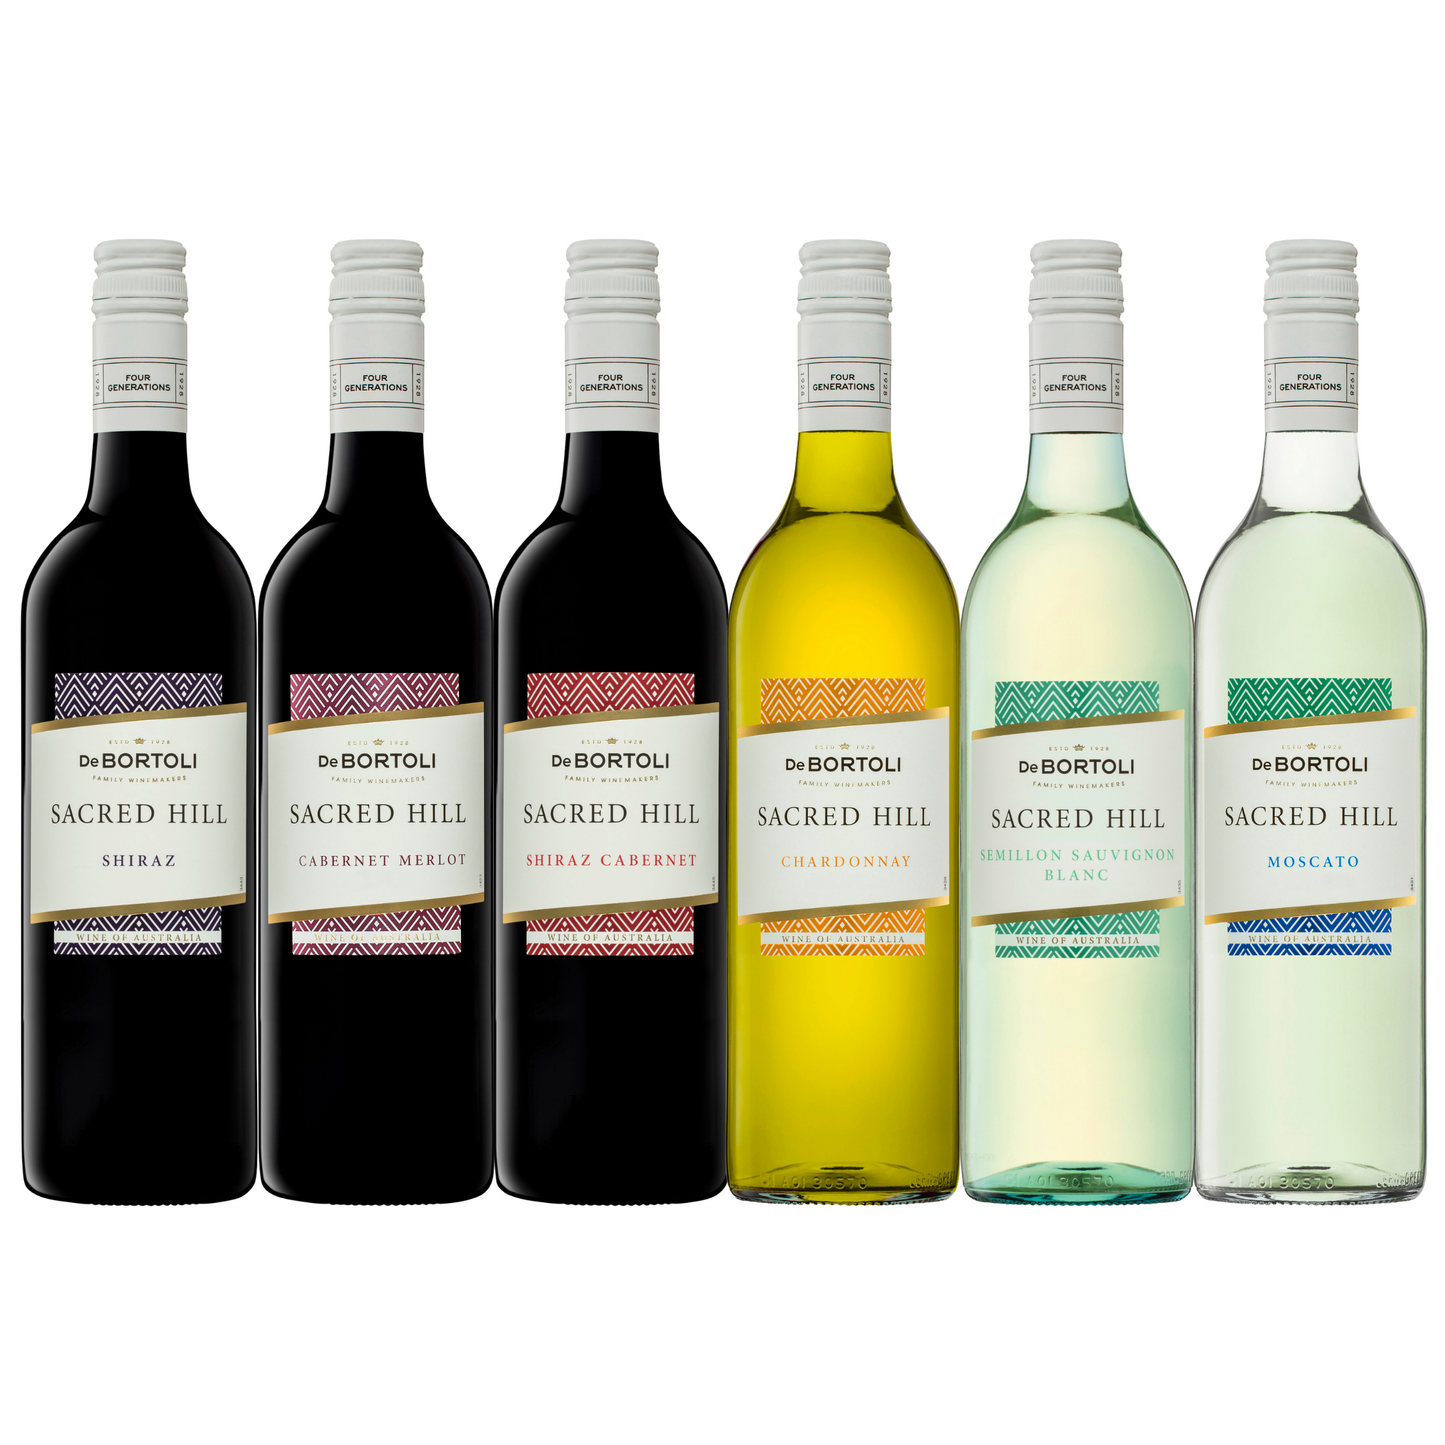 2 x De Bortoli Sacred Hill wine varieties bundle deal